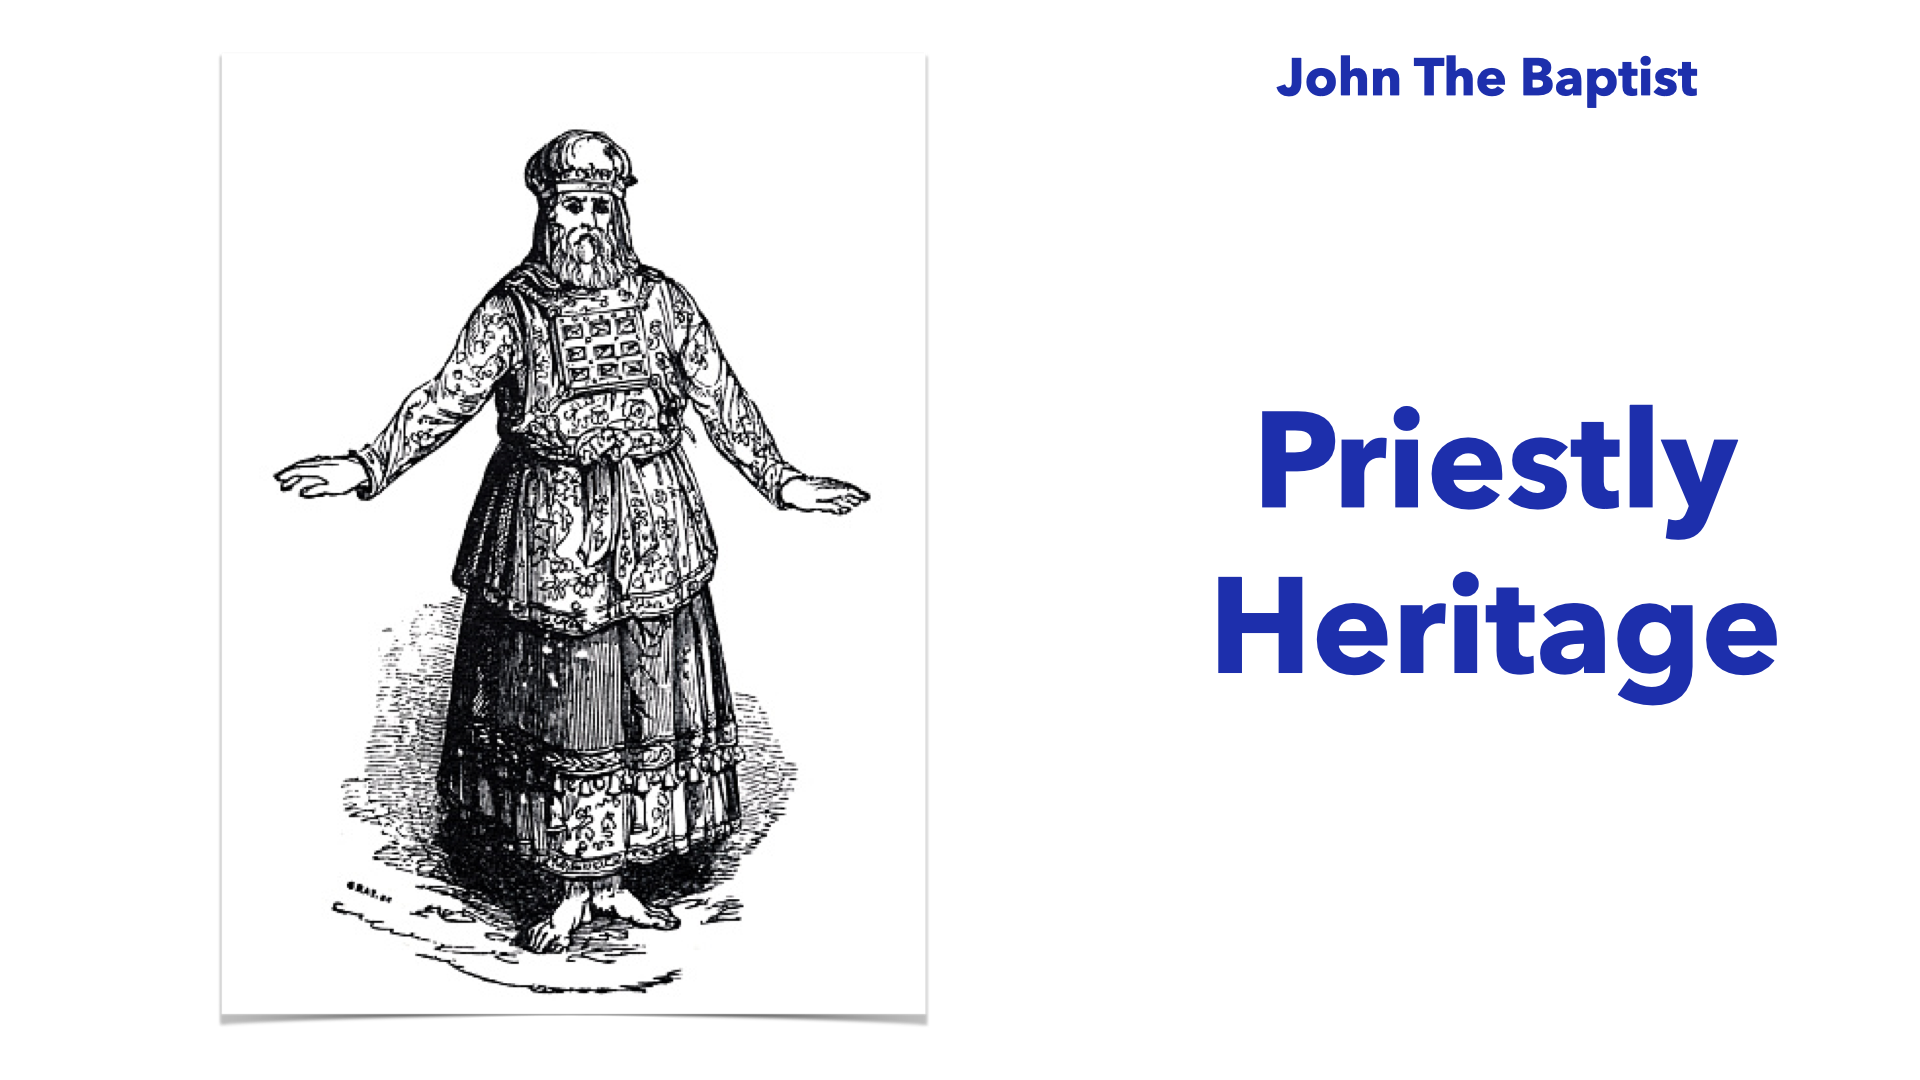 John the Baptist (priestly heritage on both side)